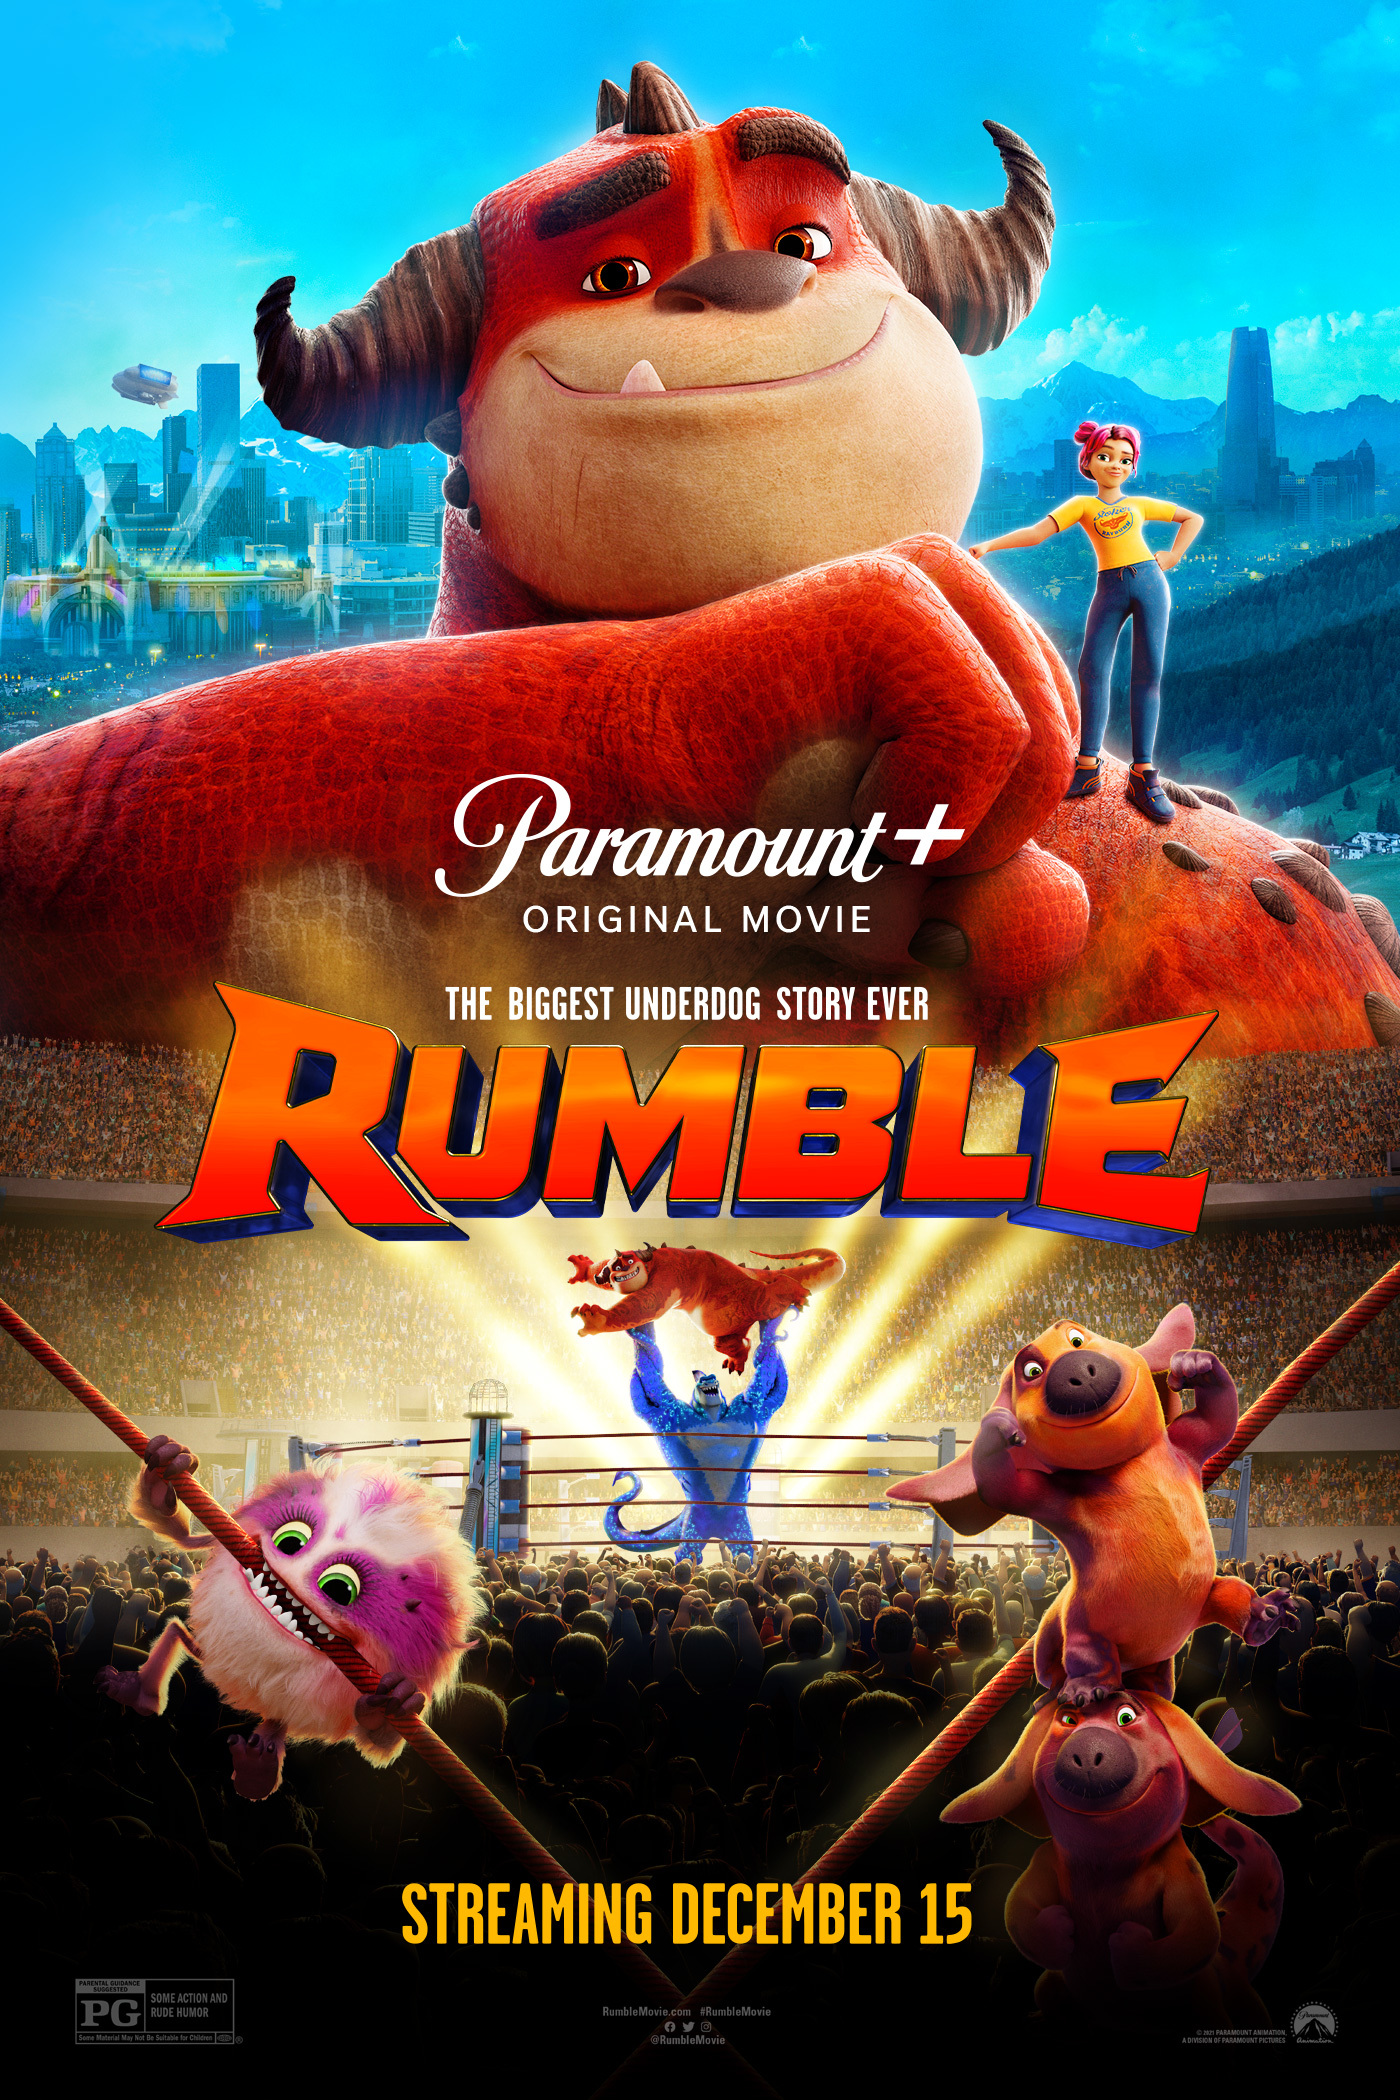 Stiahni si Filmy Kreslené  Rachot / Rumble (2021)(CZ)[WebRip][1080p] = CSFD 59%